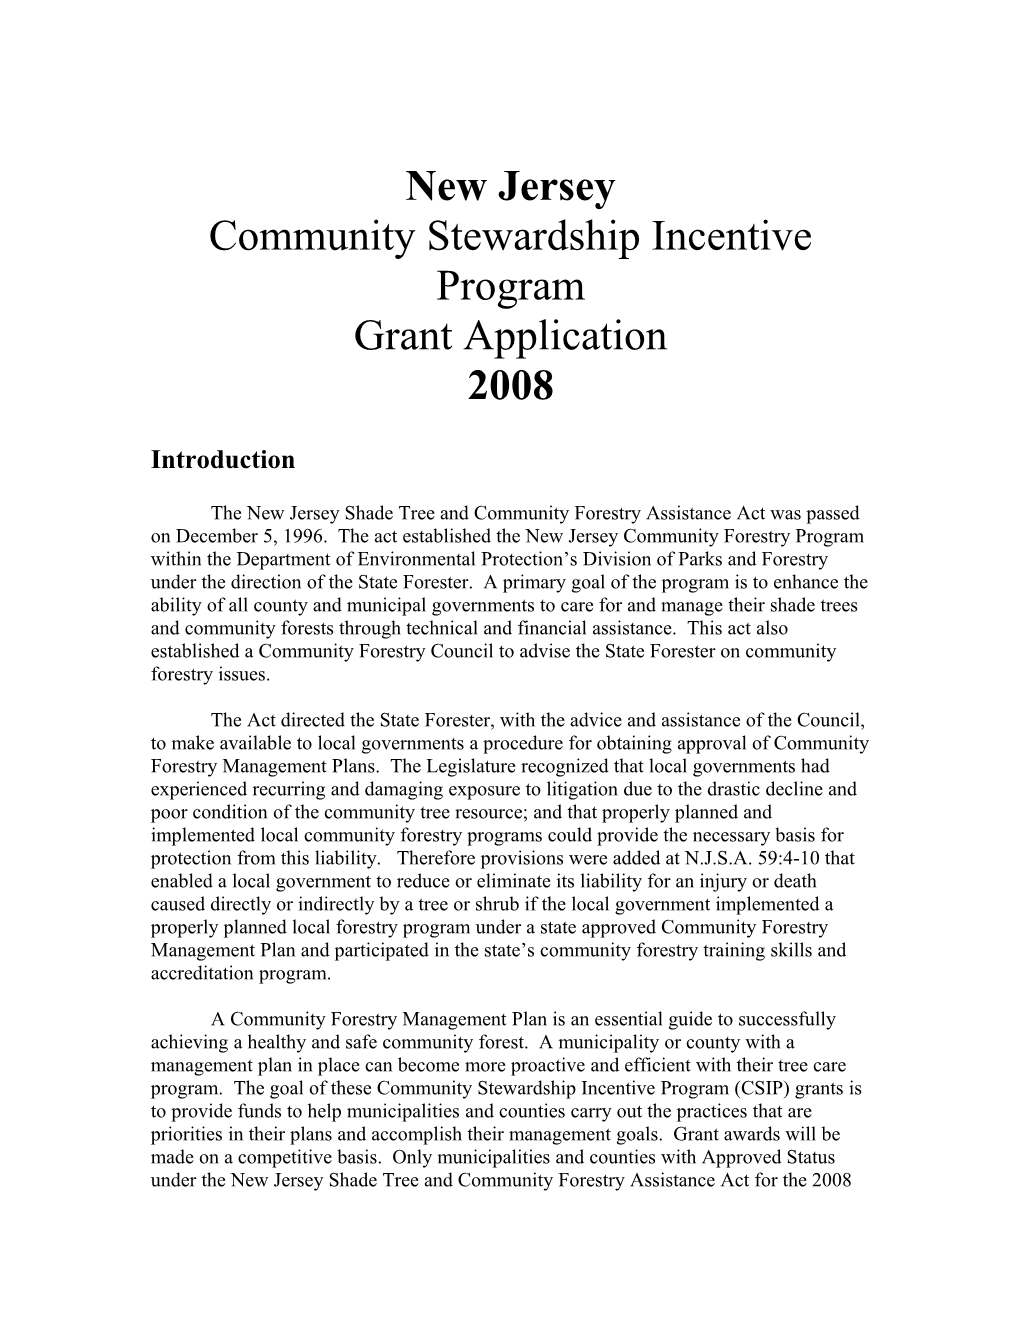 Community Stewardship Incentive Program